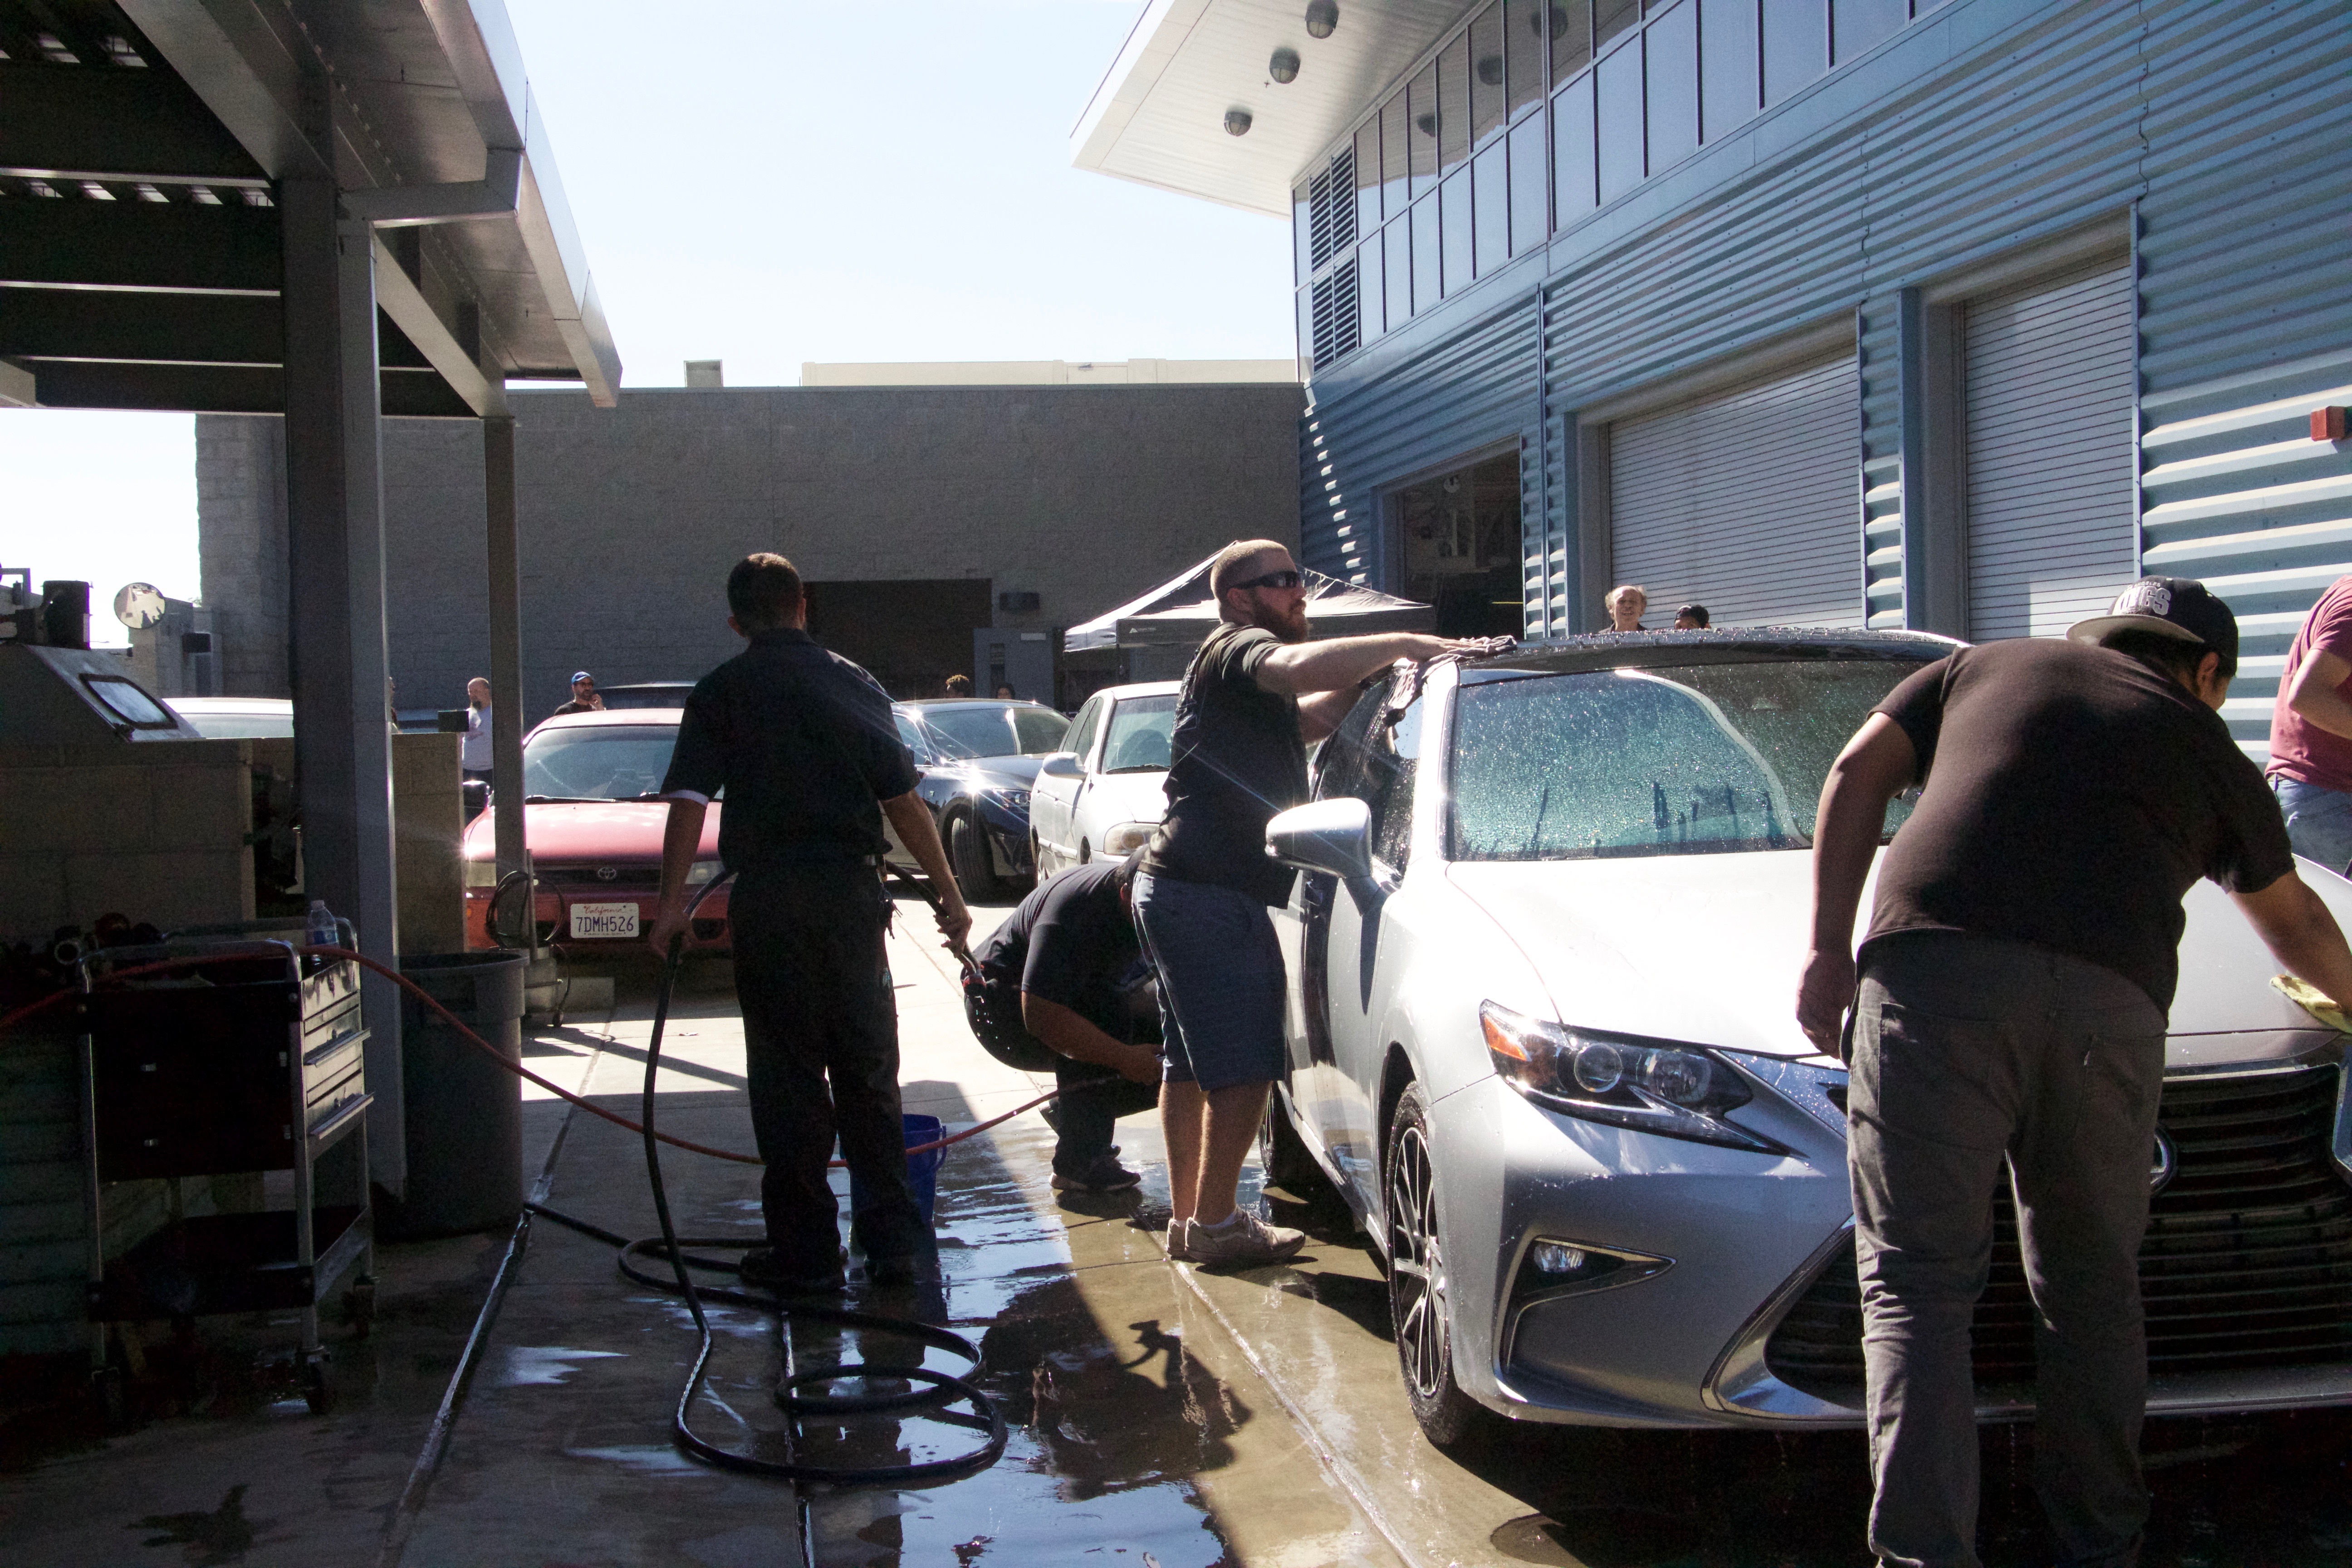 Faculty Association car wash raises money for scholarship